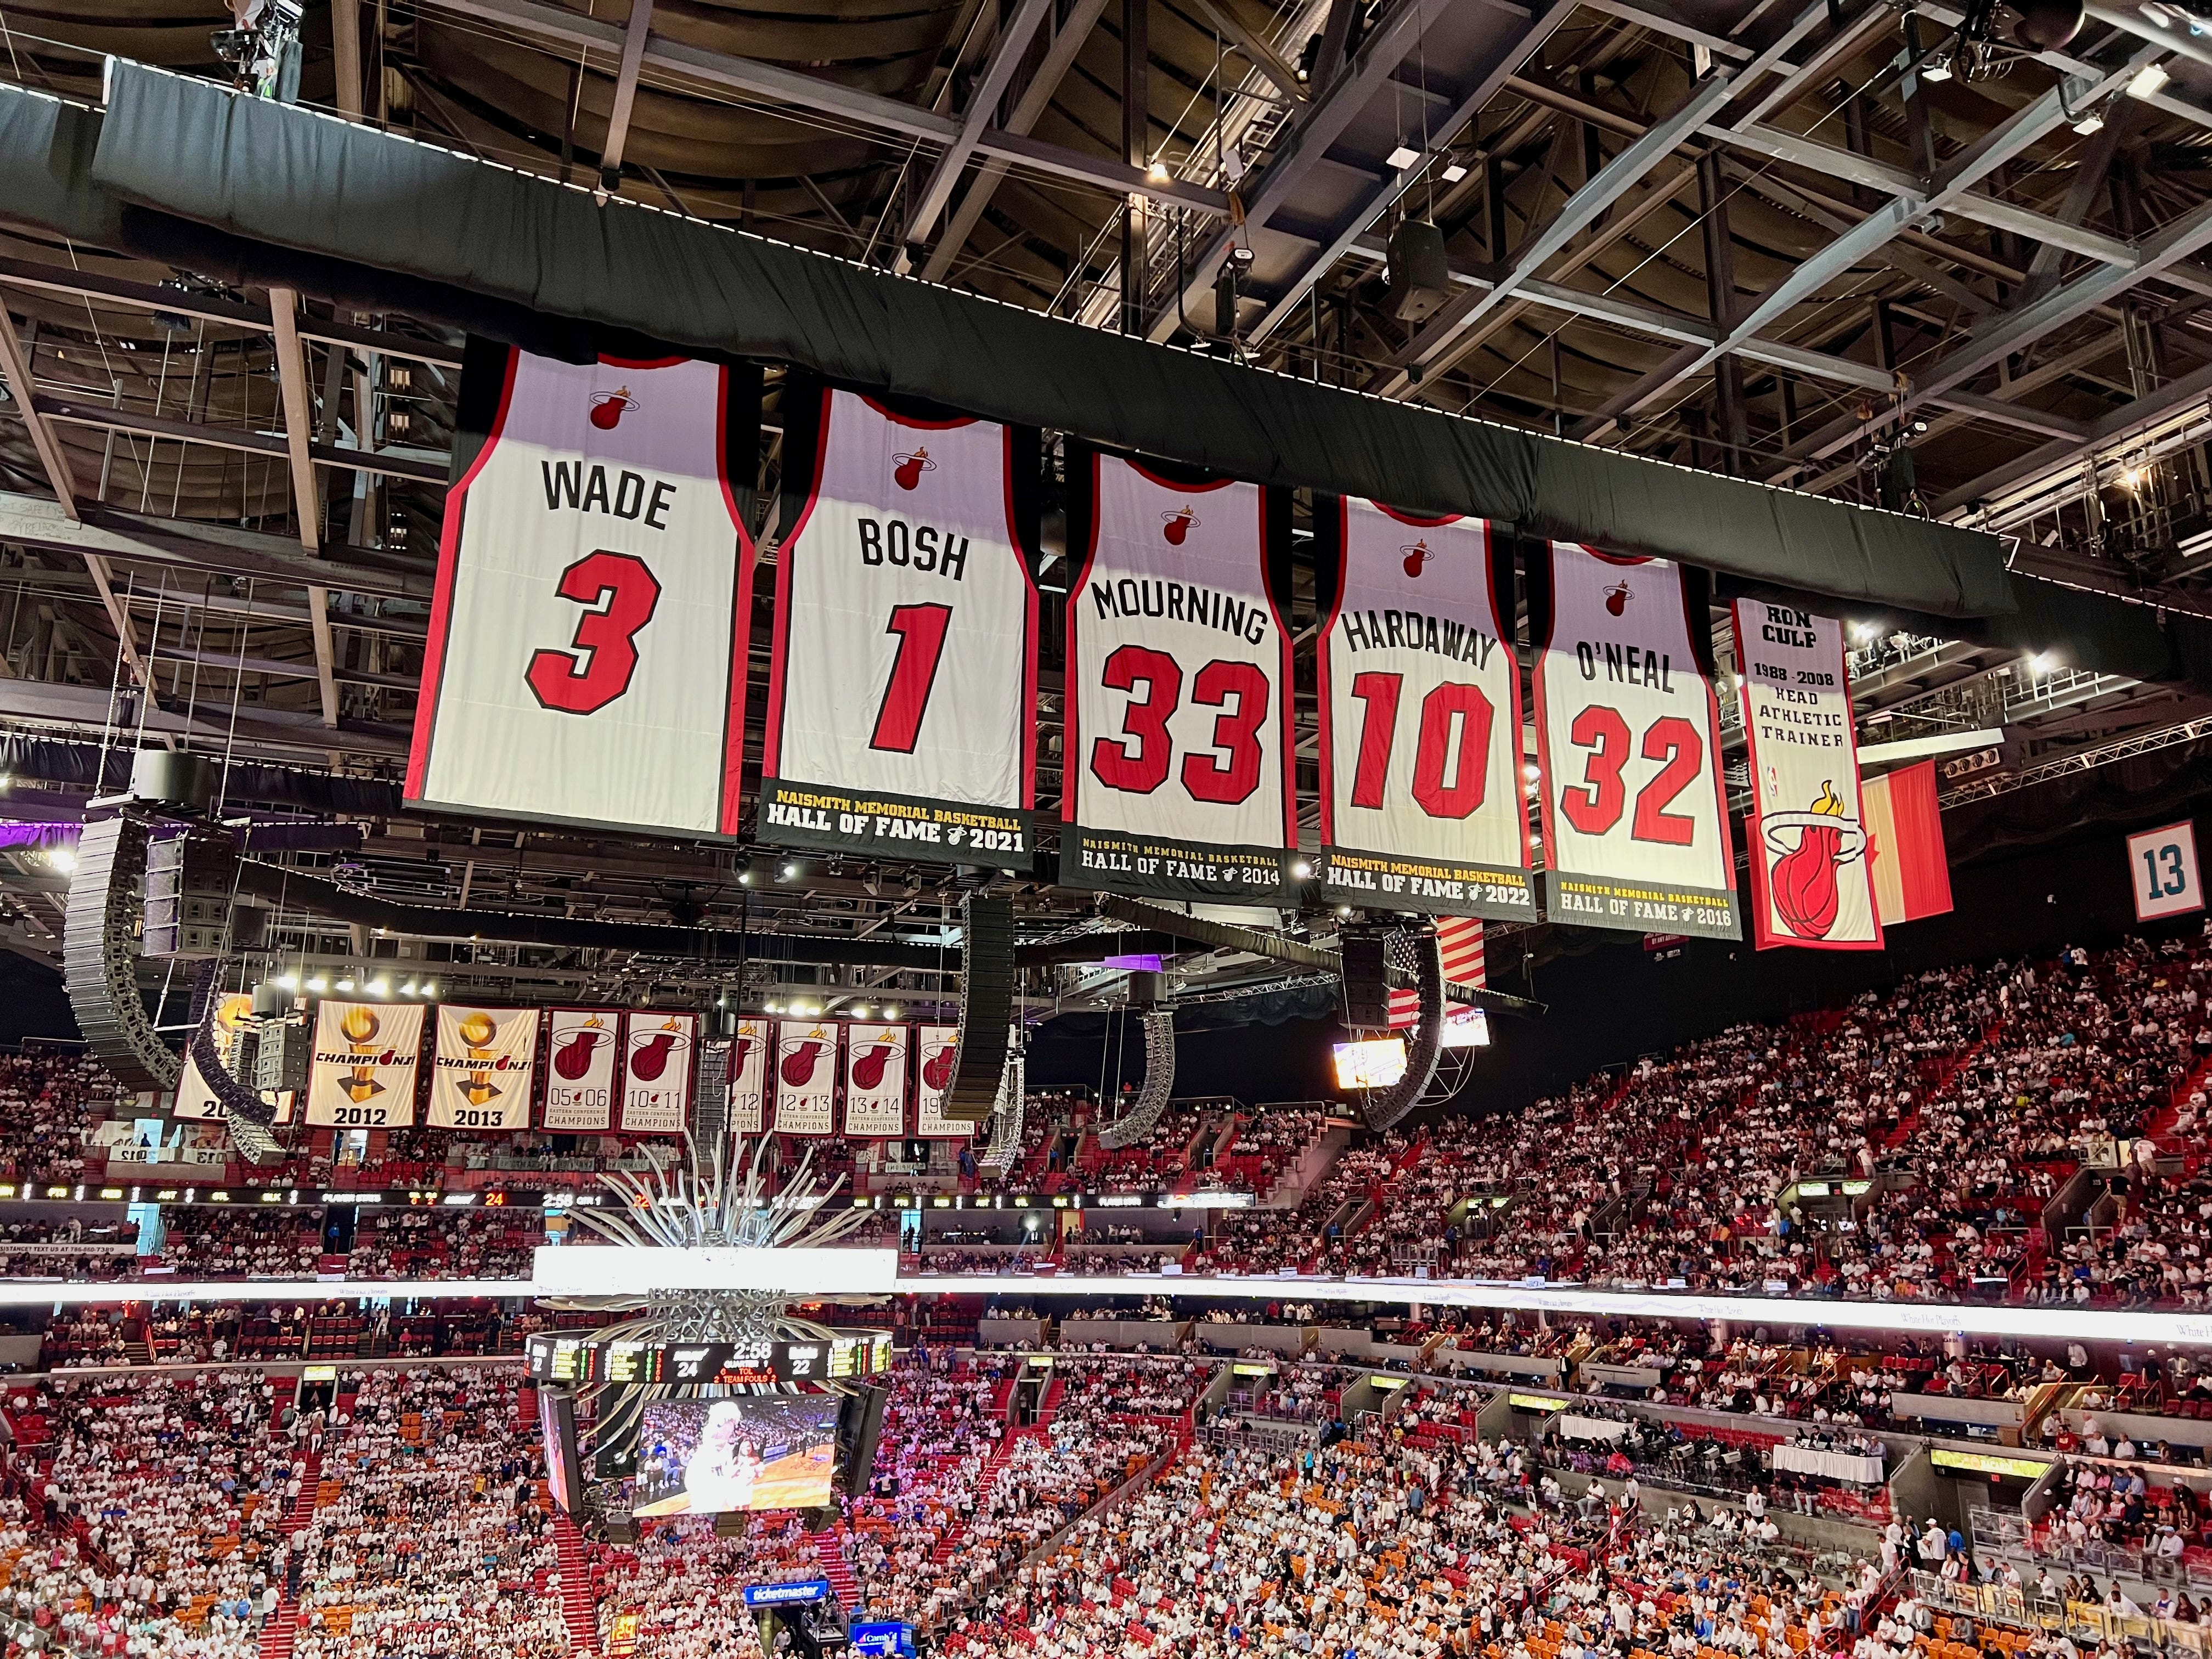 Heat NBA draft picks 2023: When do Miami Heat pick? Order and more